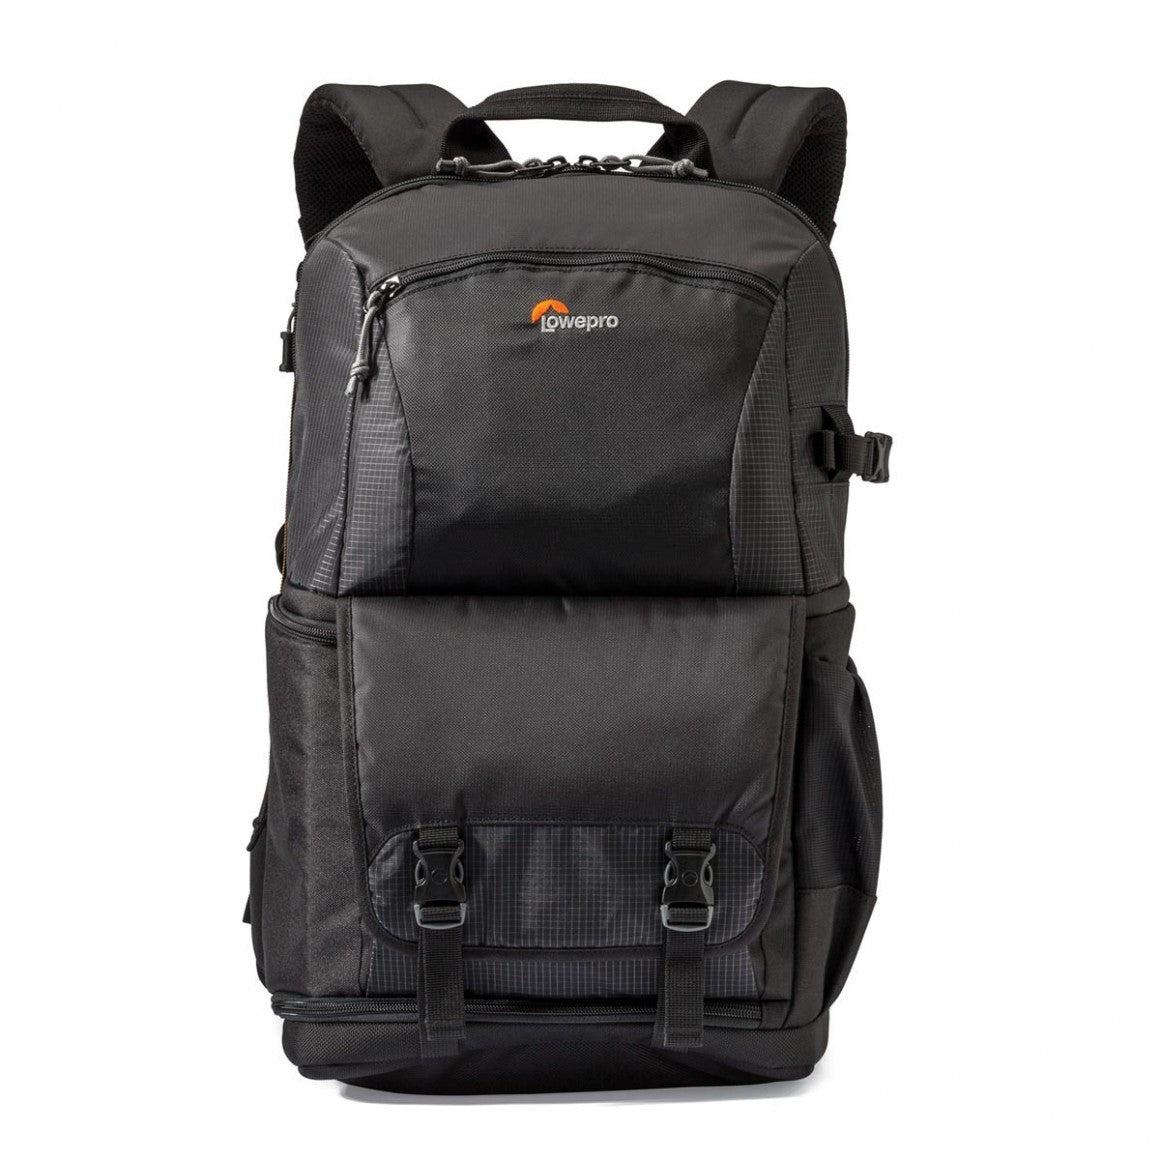 Lowepro Fastpack 250 AW II Backpack (Black), bags backpacks, Lowepro - Pictureline  - 1